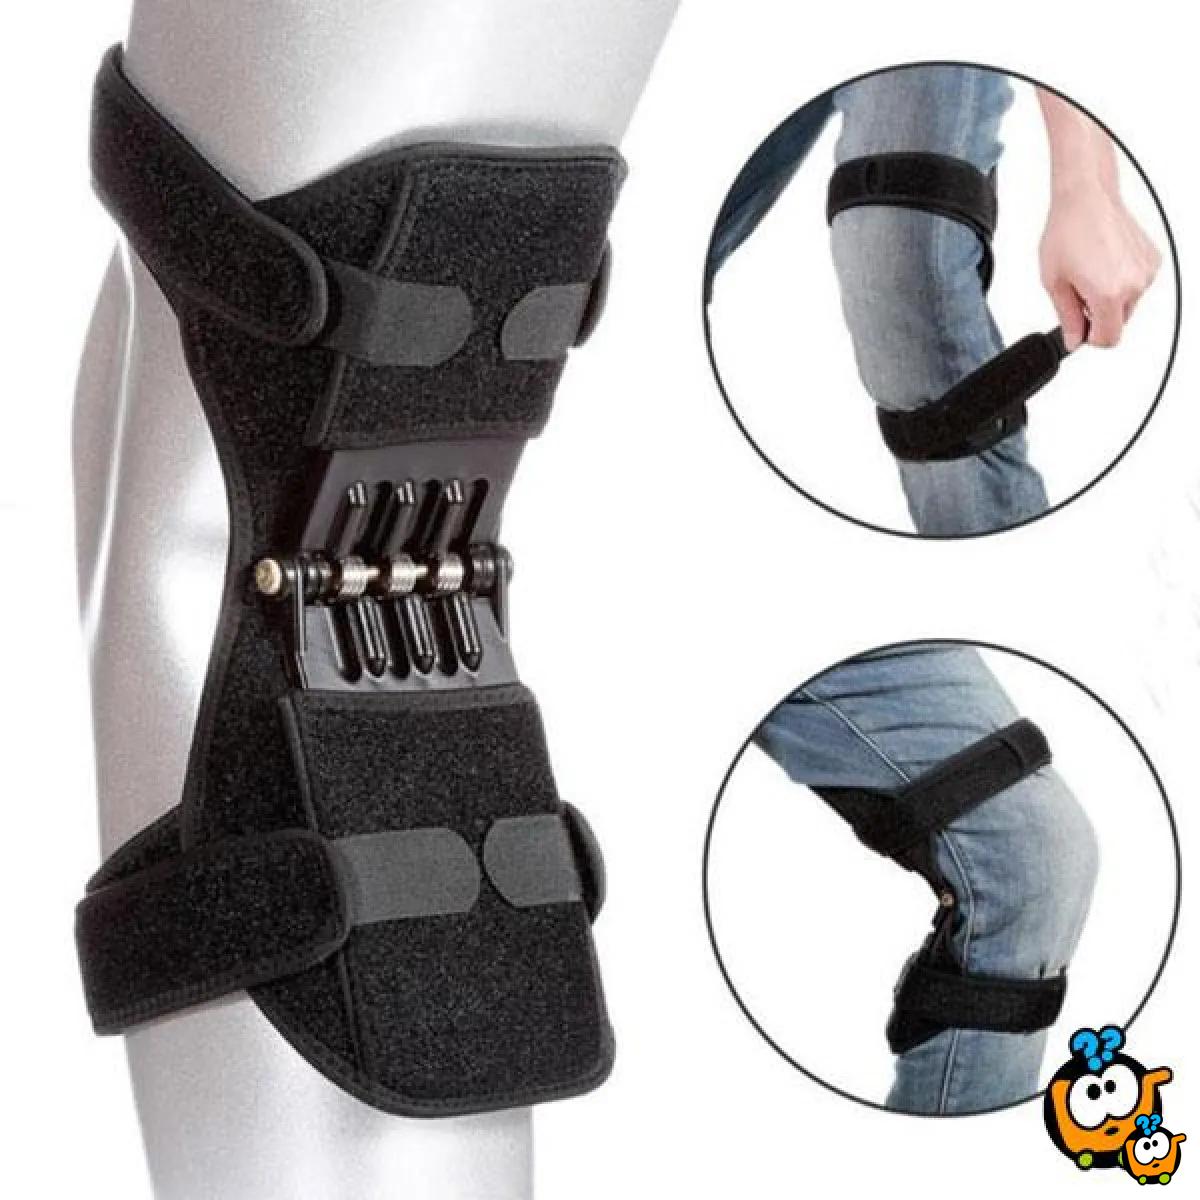 Knee Booster - Potporna proteza za koleno za lako i bezbolno kretanje